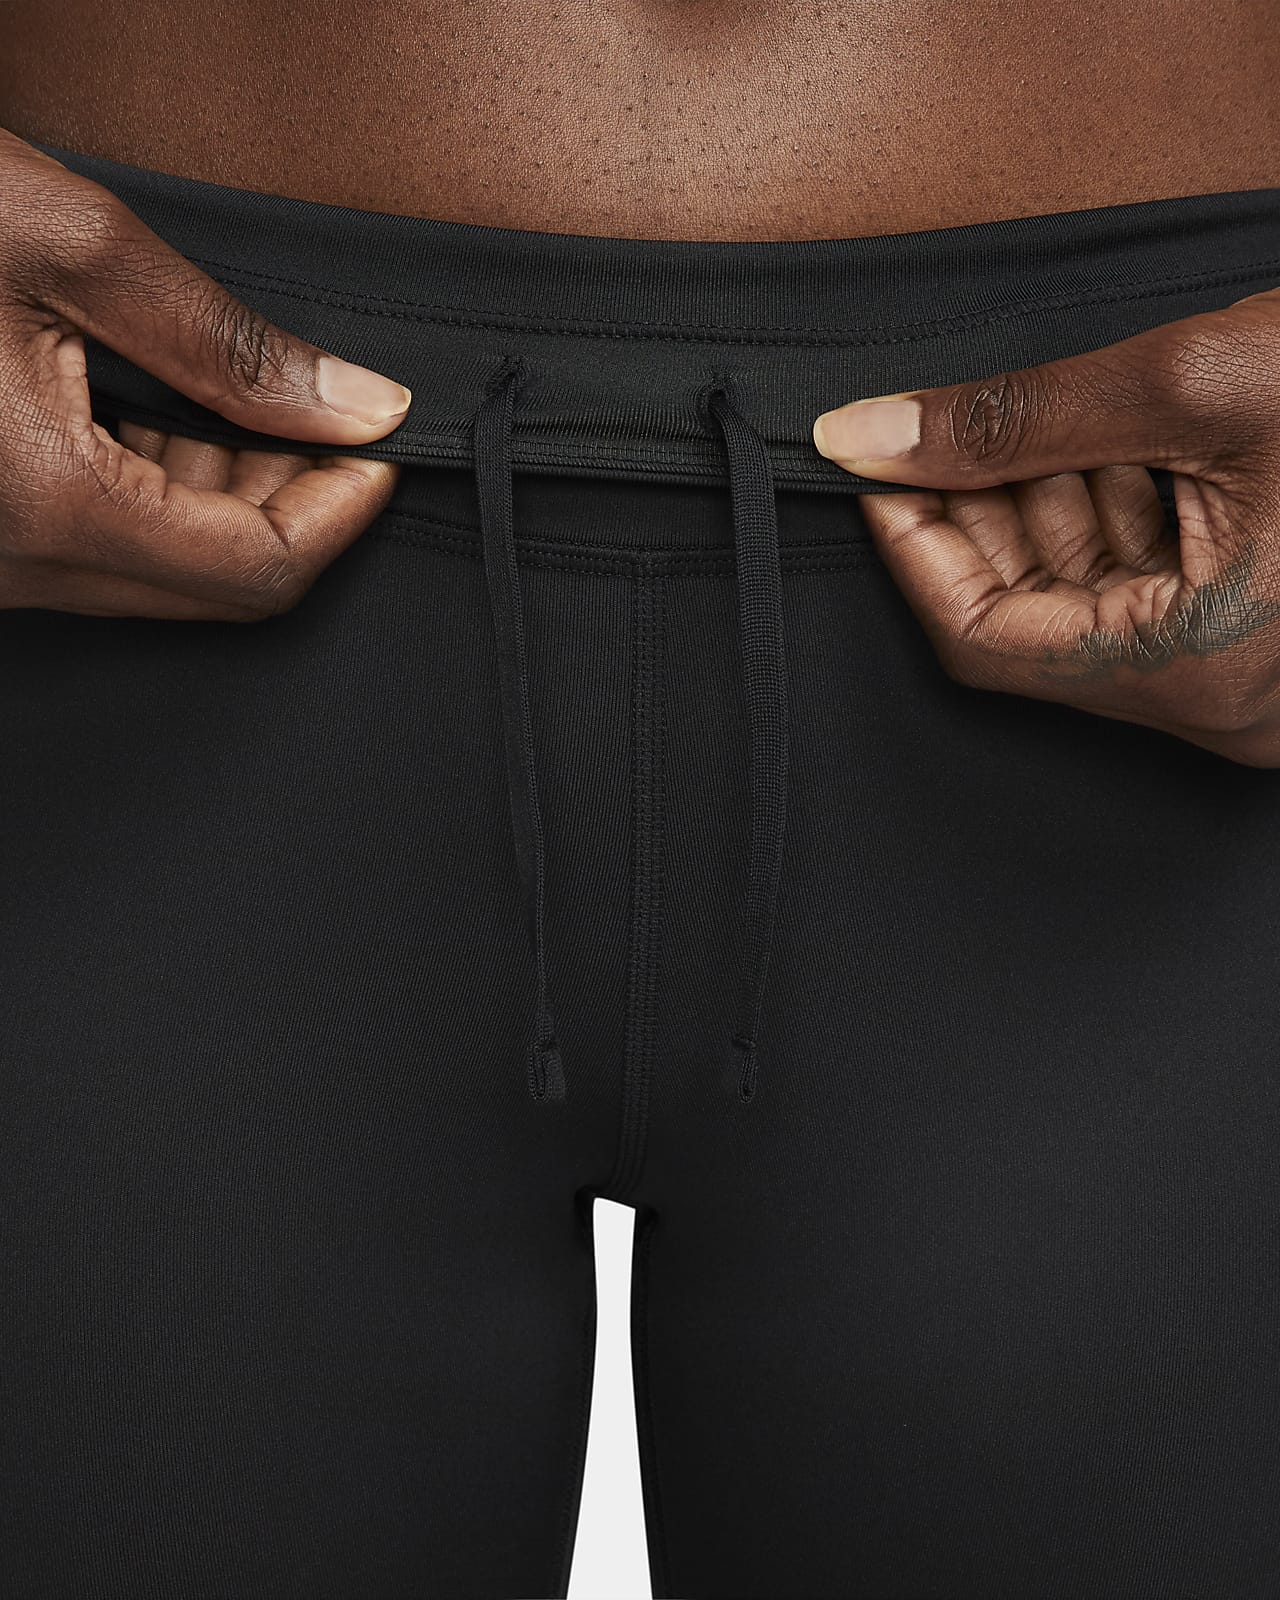 Nike Universa Women's Medium-Support High-Waisted 7/8 Printed Leggings with  Pockets. Nike LU